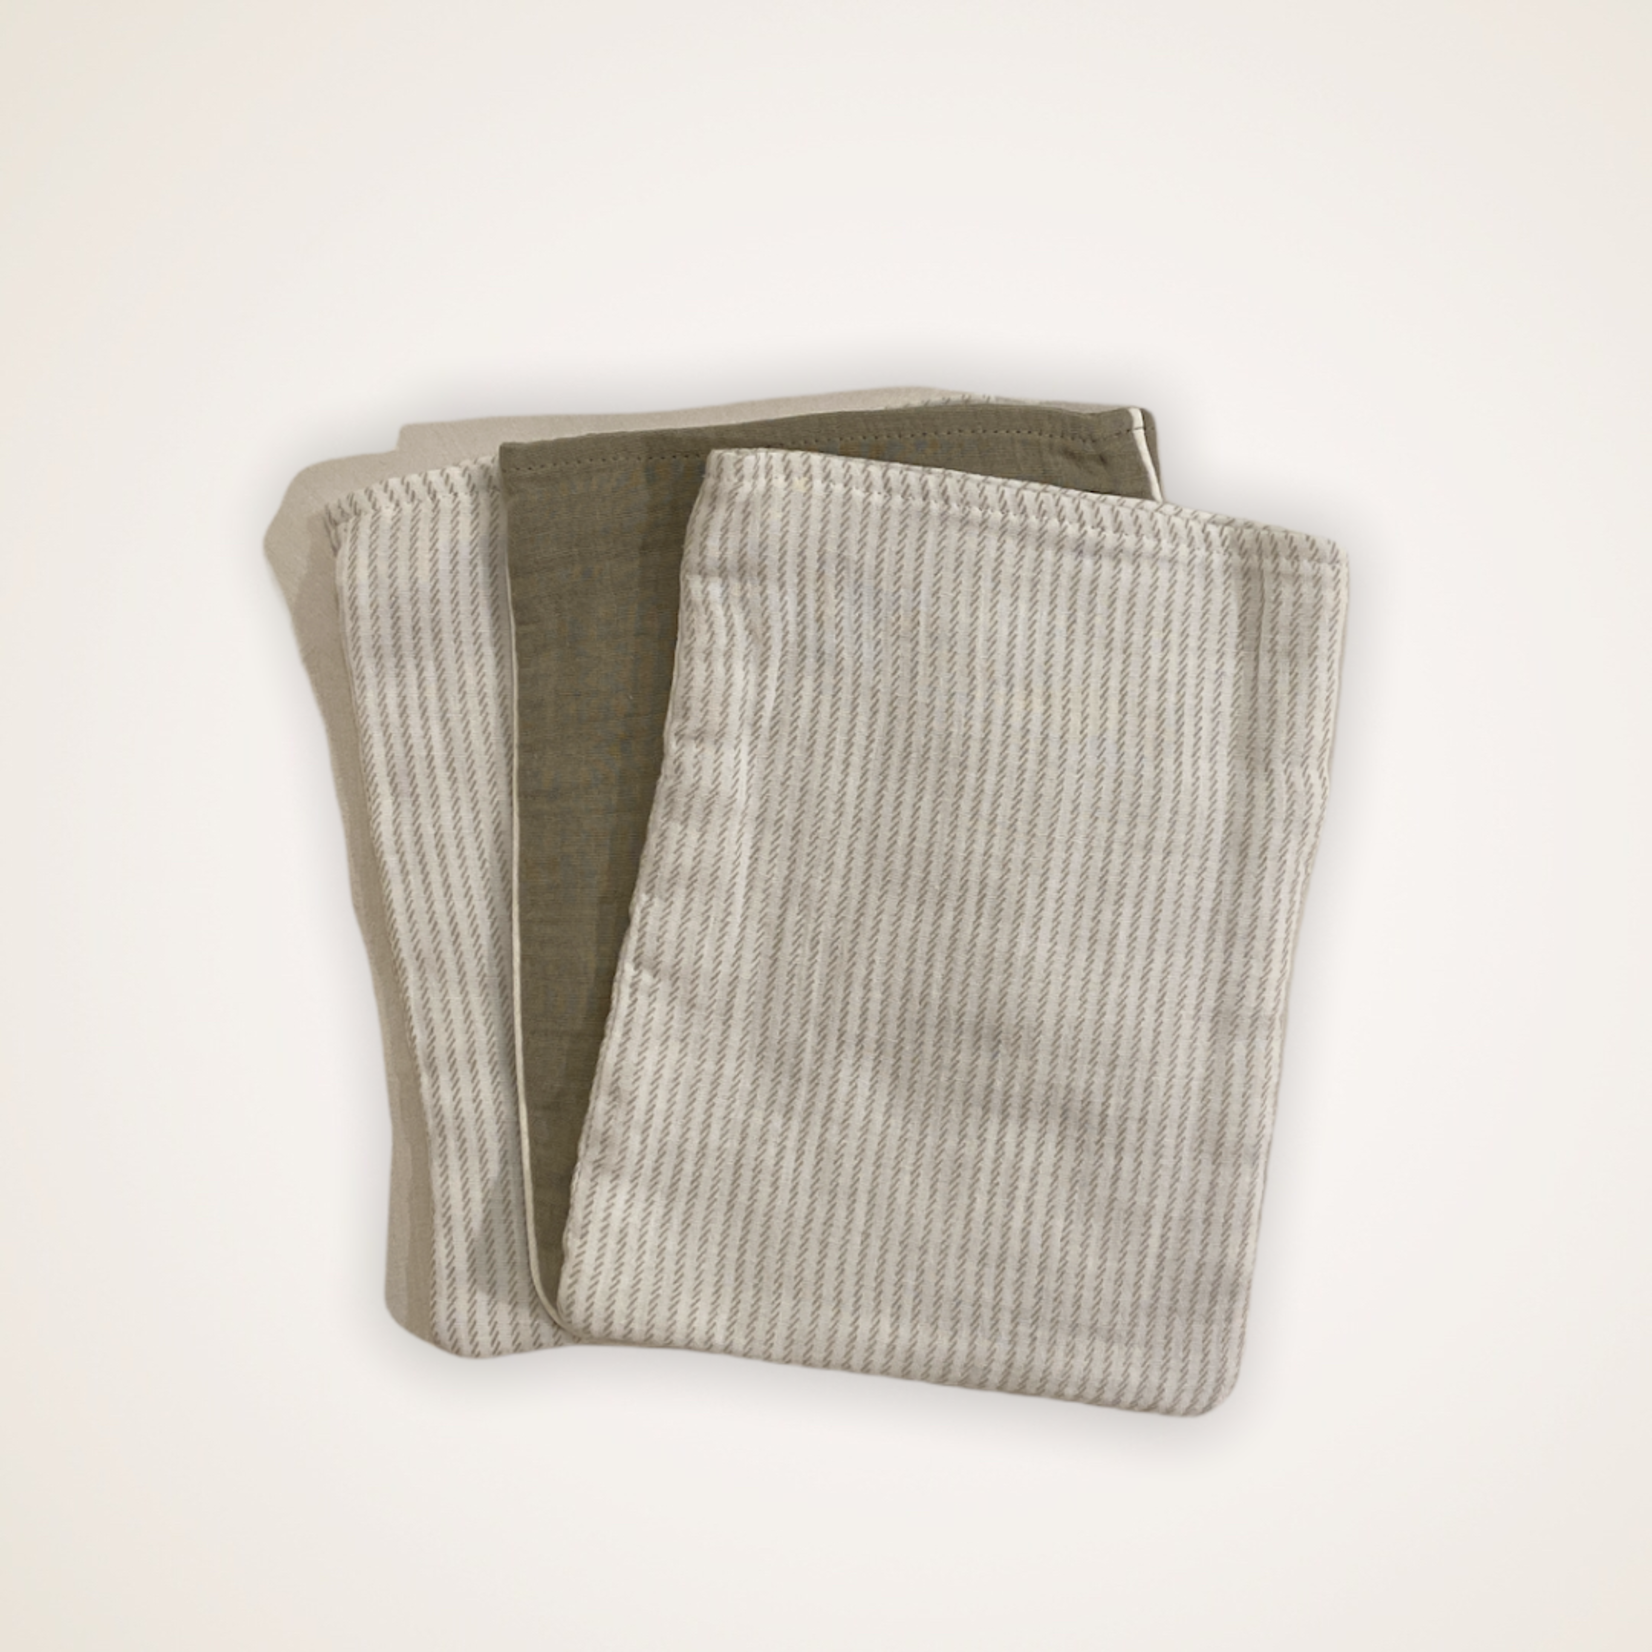 Coco&pine Jules Olive - Muslin washcloth 3 pack - 2x stripe/1x olive